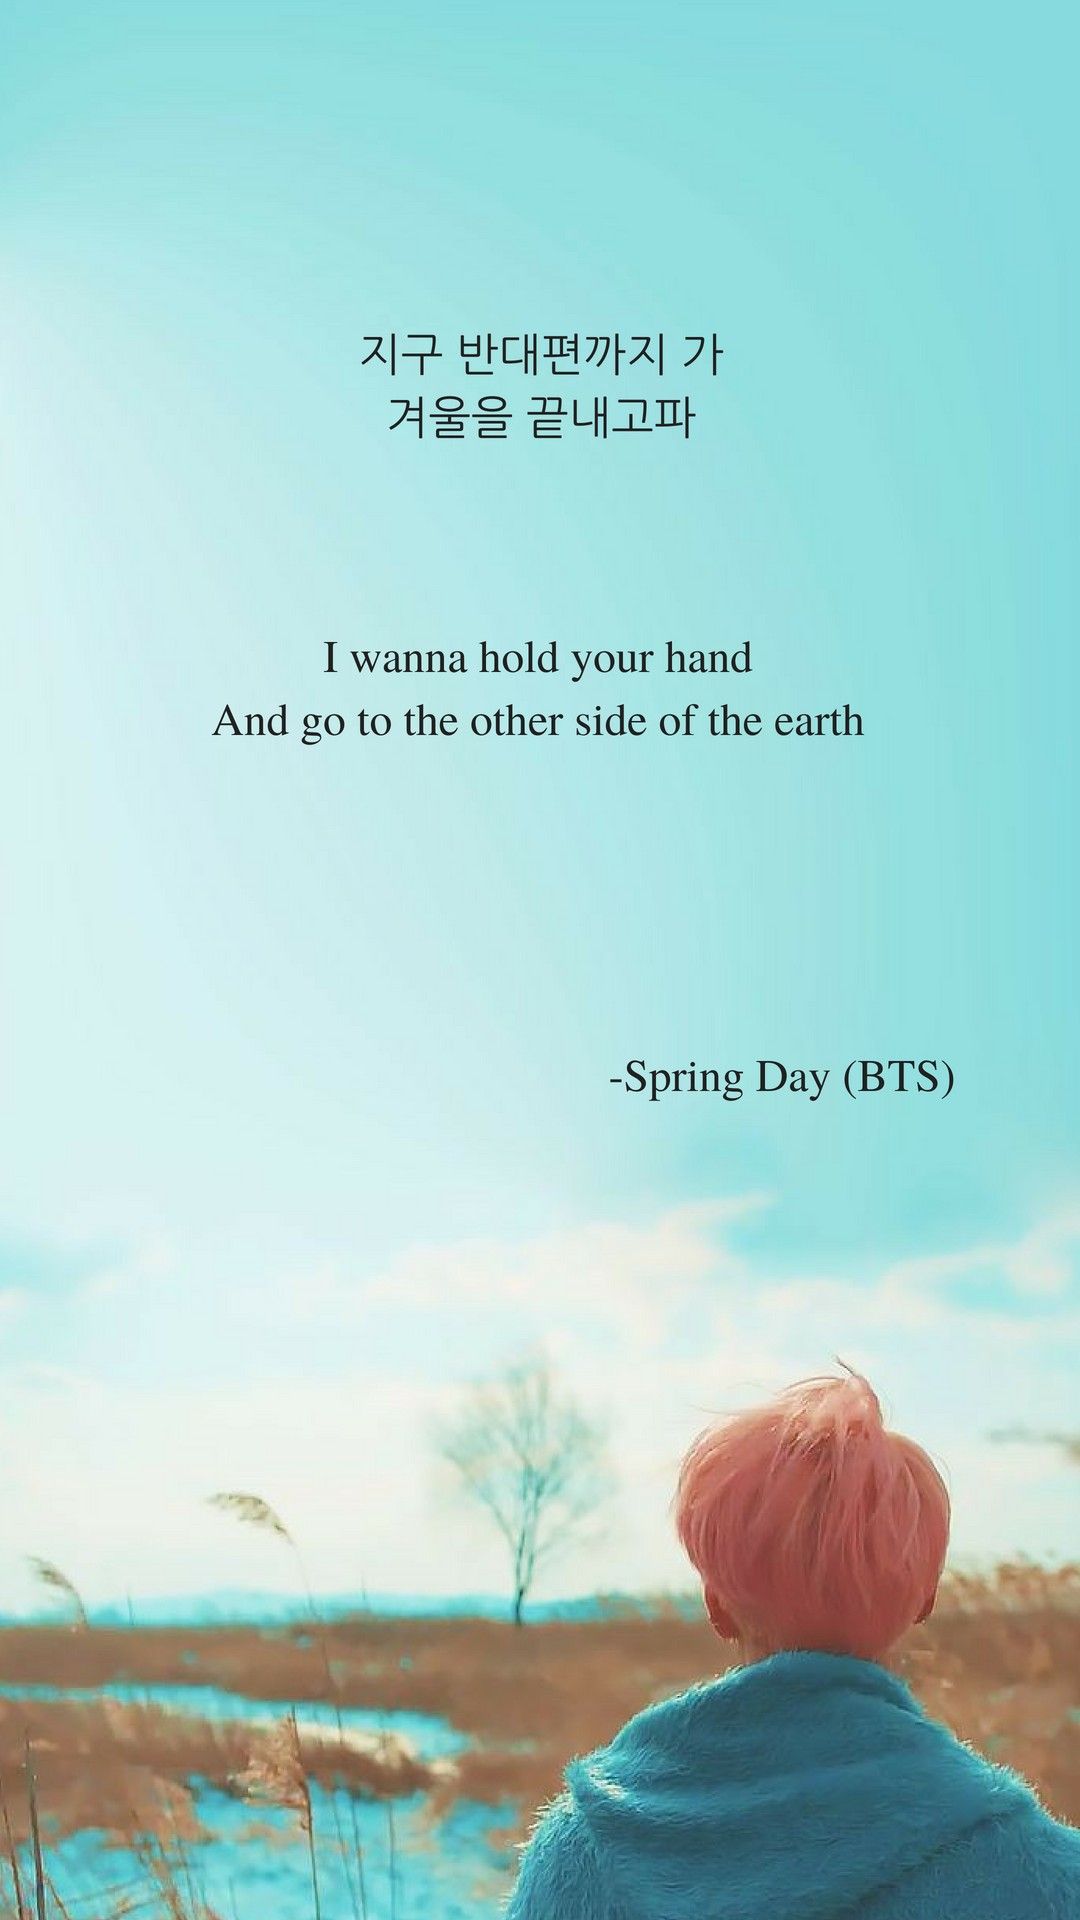 Spring Day By Bts Lyrics Wallpaper Song